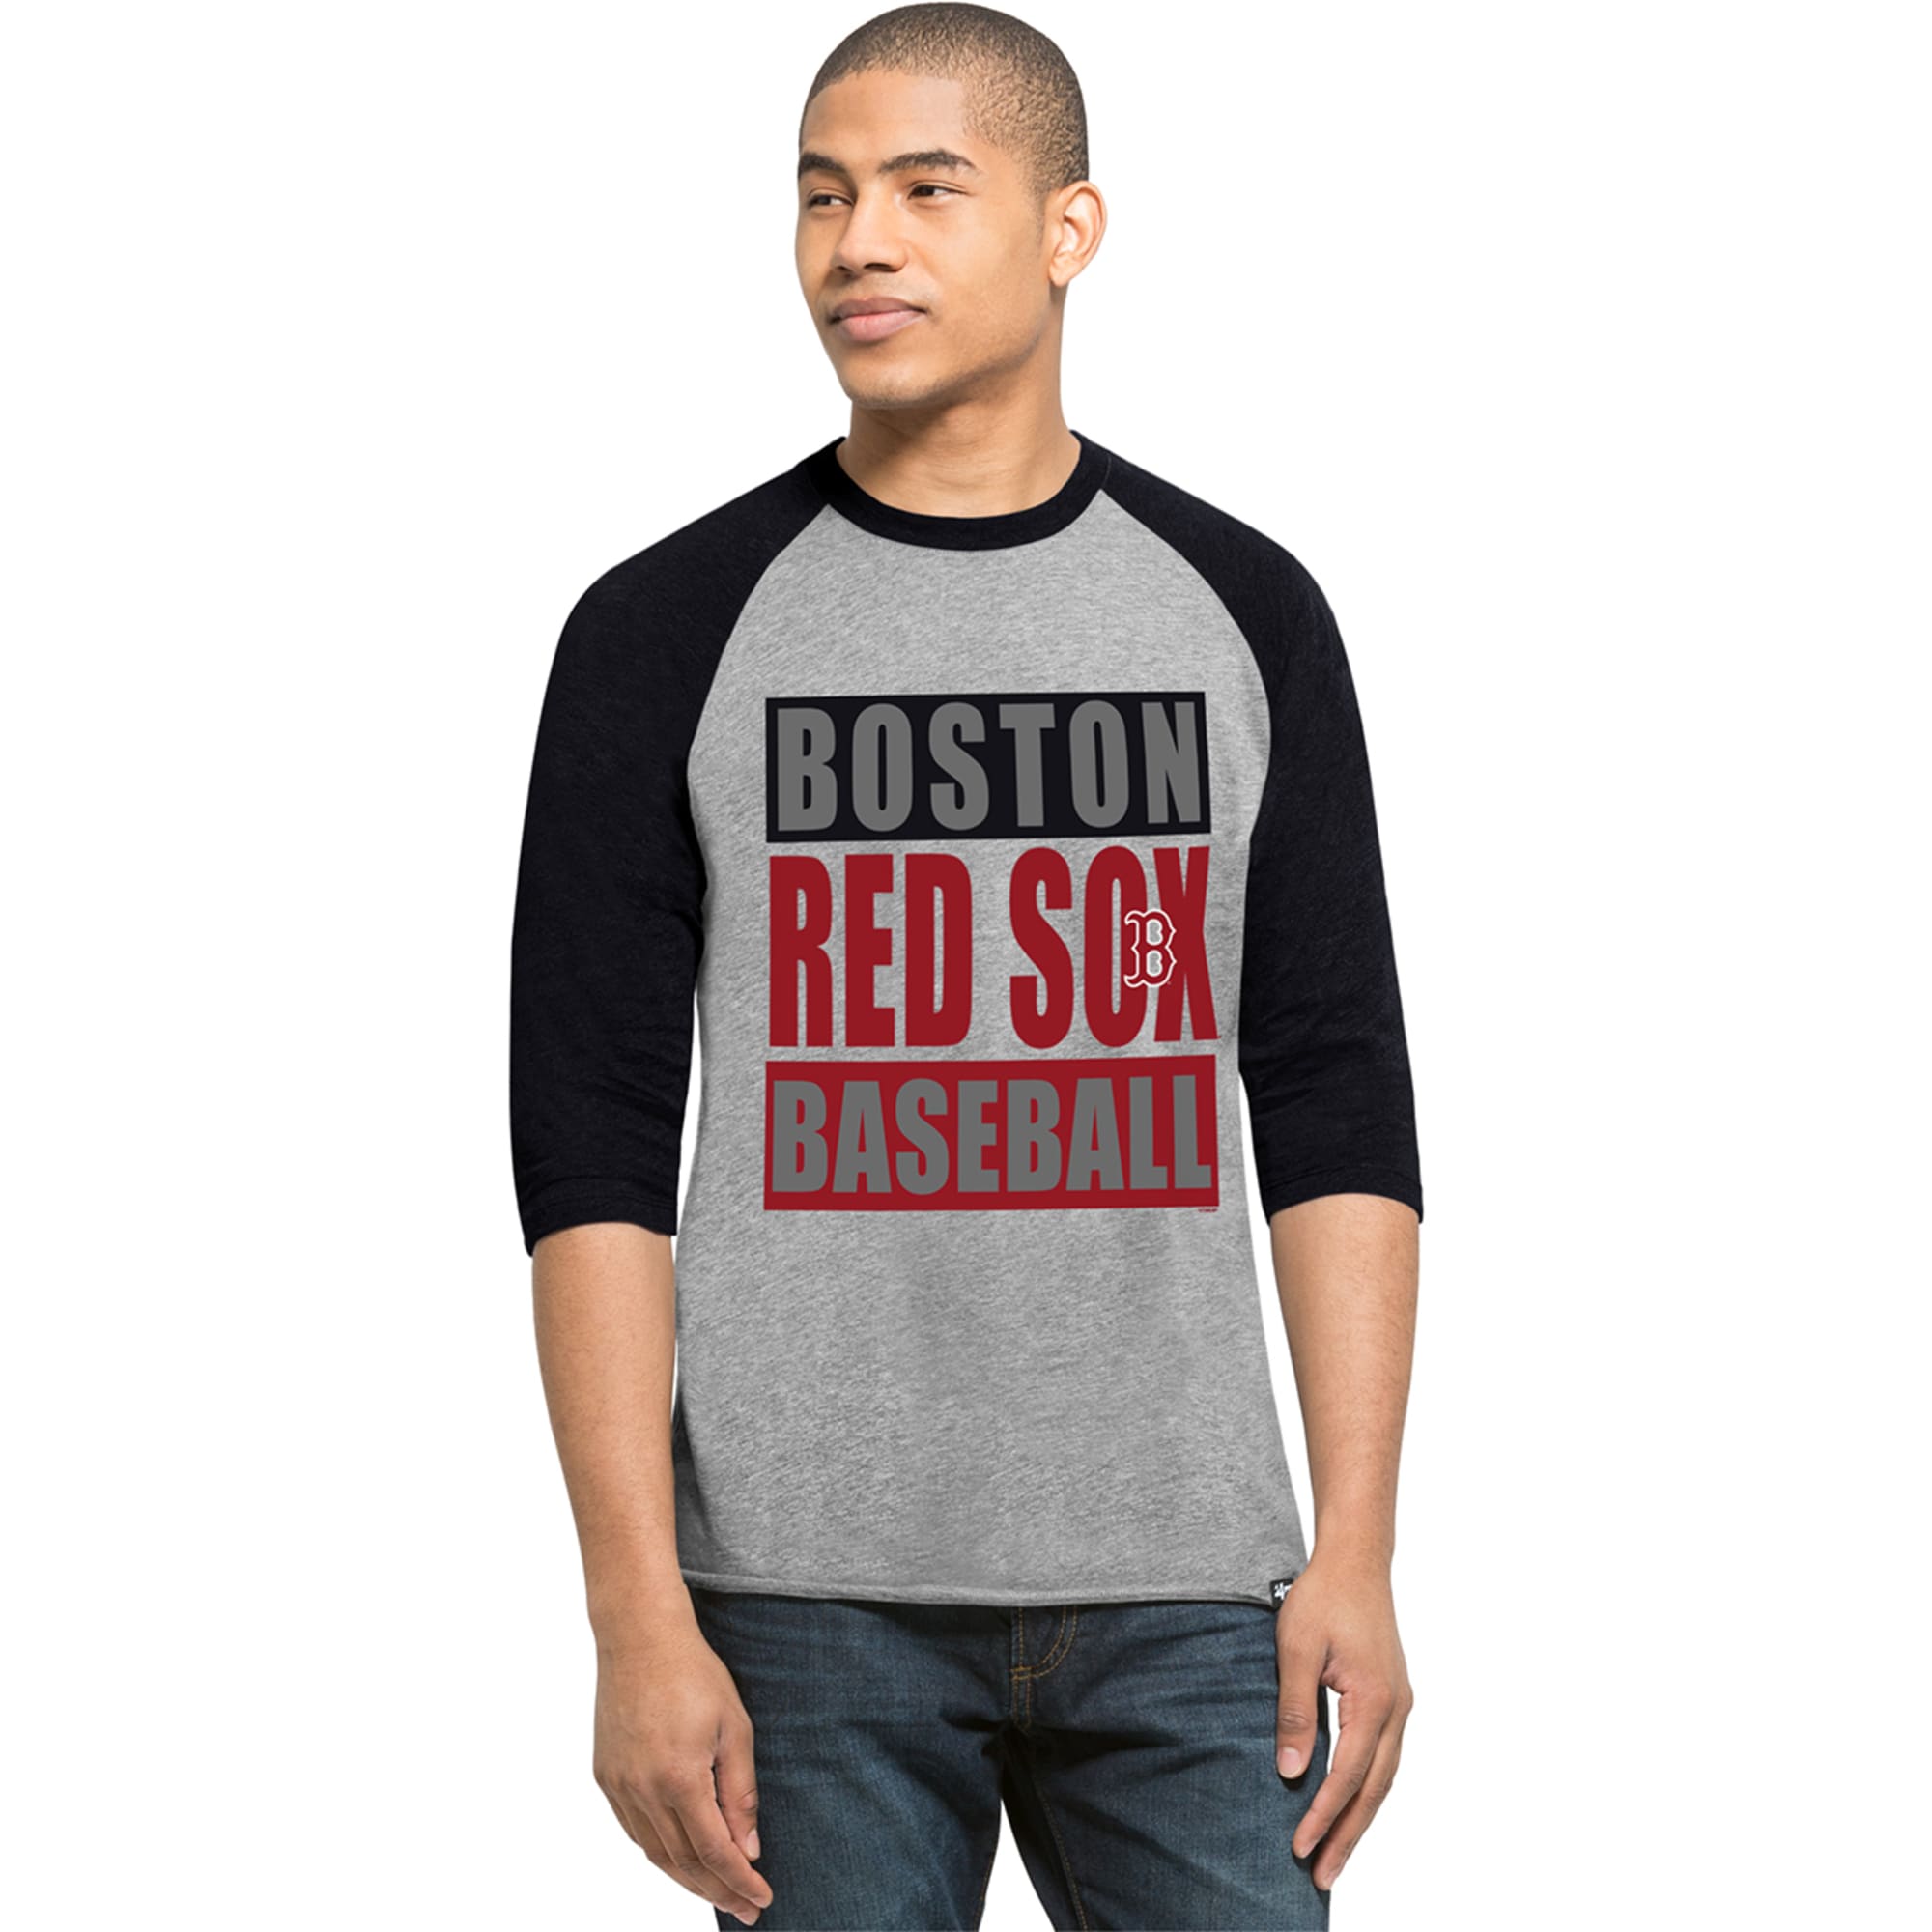 BOSTON RED SOX Men's '47 Club Raglan 3/4 Sleeve Tee - Bob's Stores